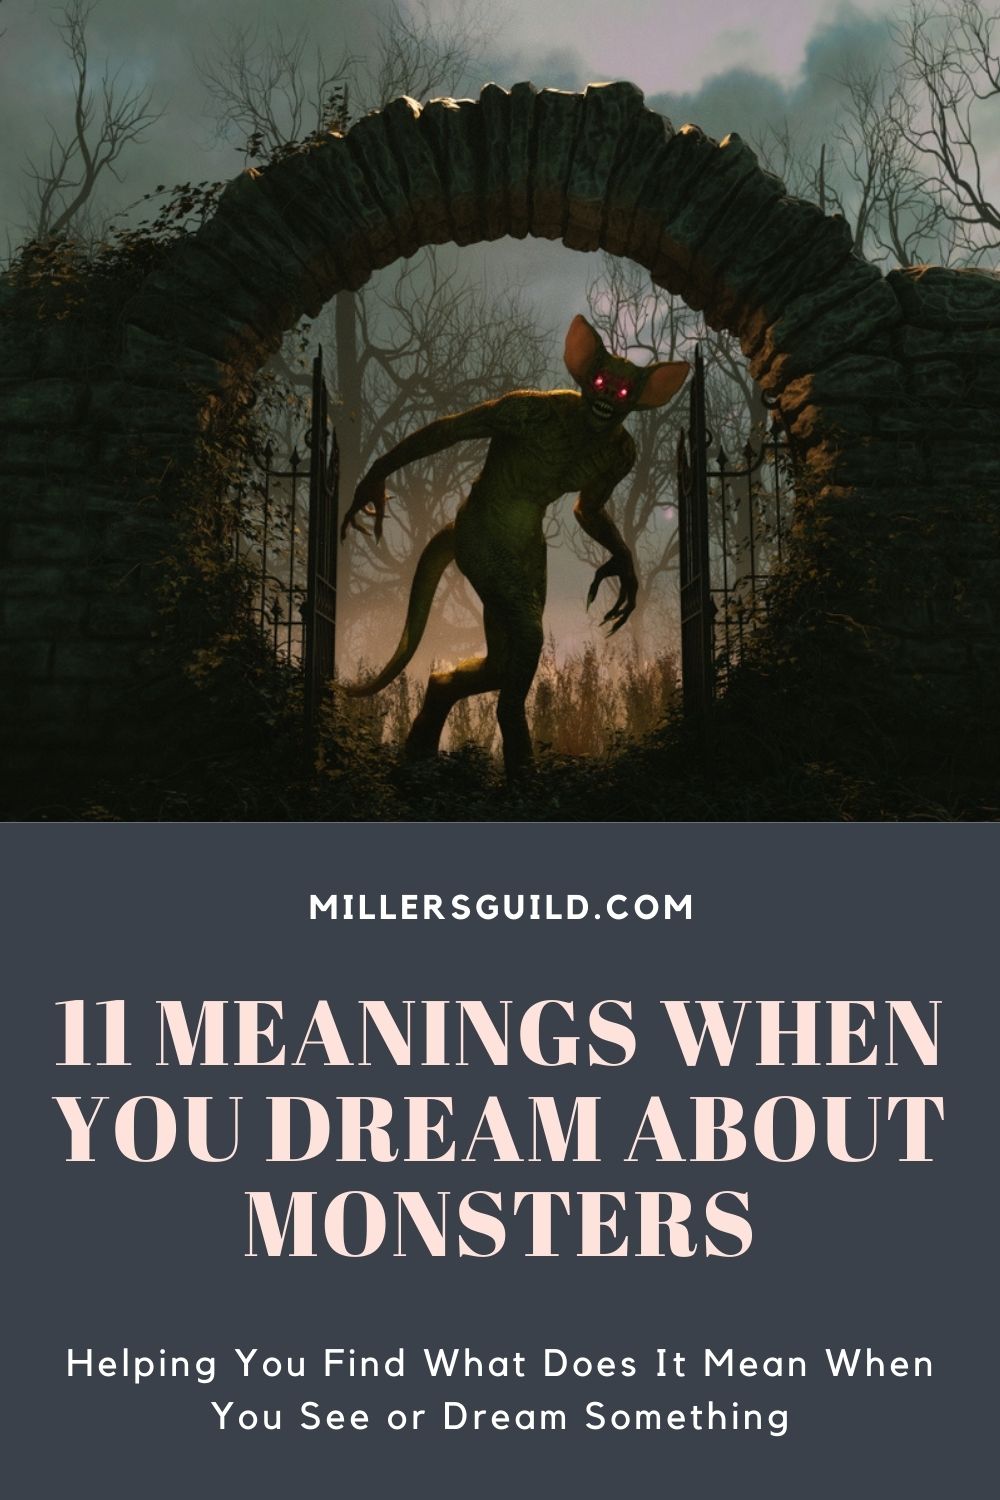 How To Interpret Monster Dreams